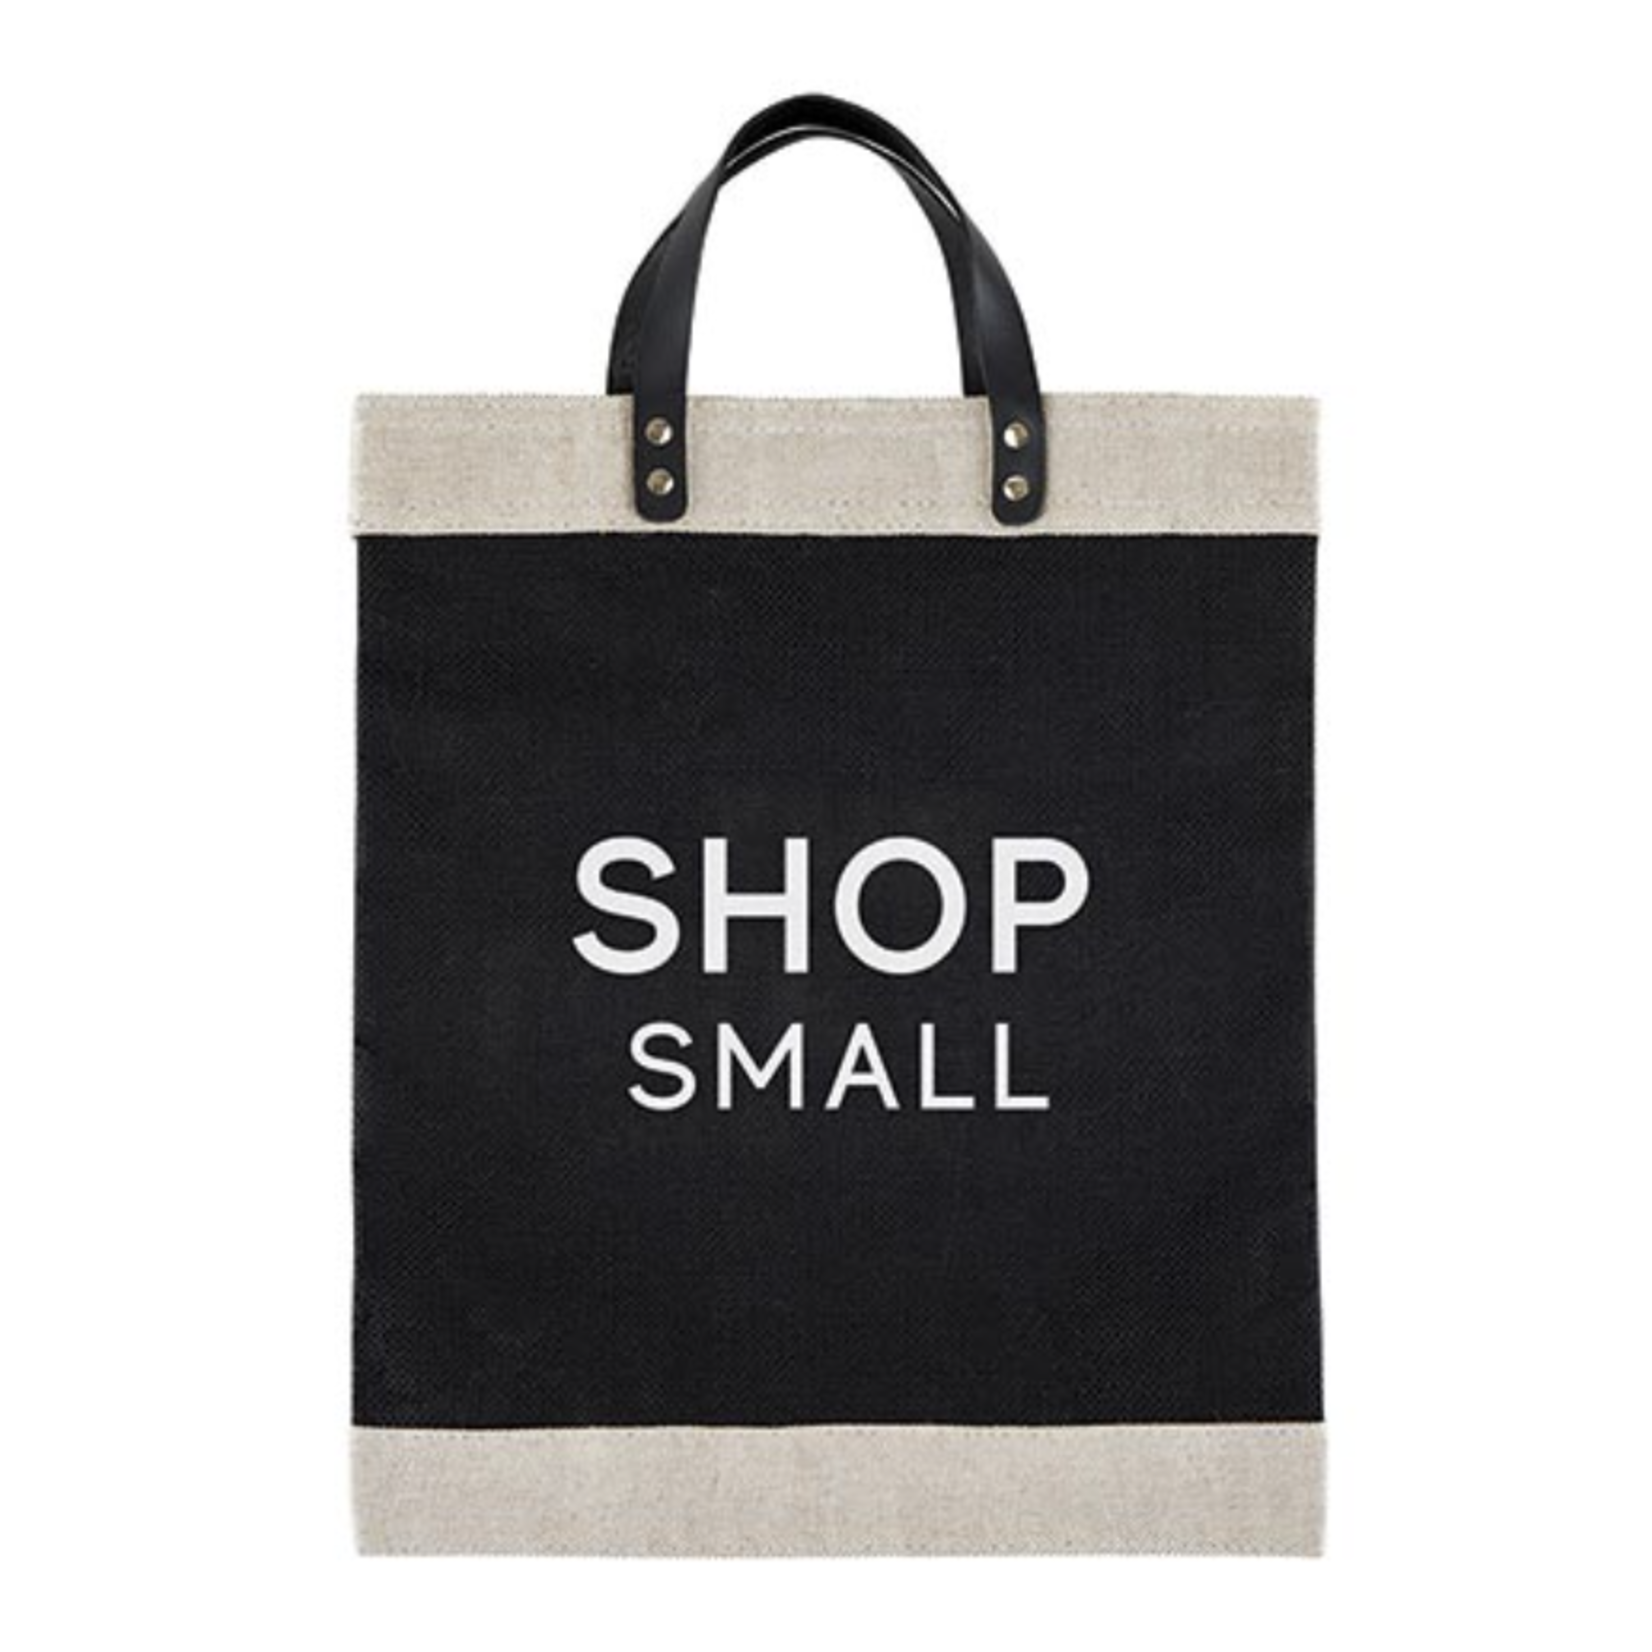 Outside The Box 13x8x18 “Shop Small” Bag Black Market Tote